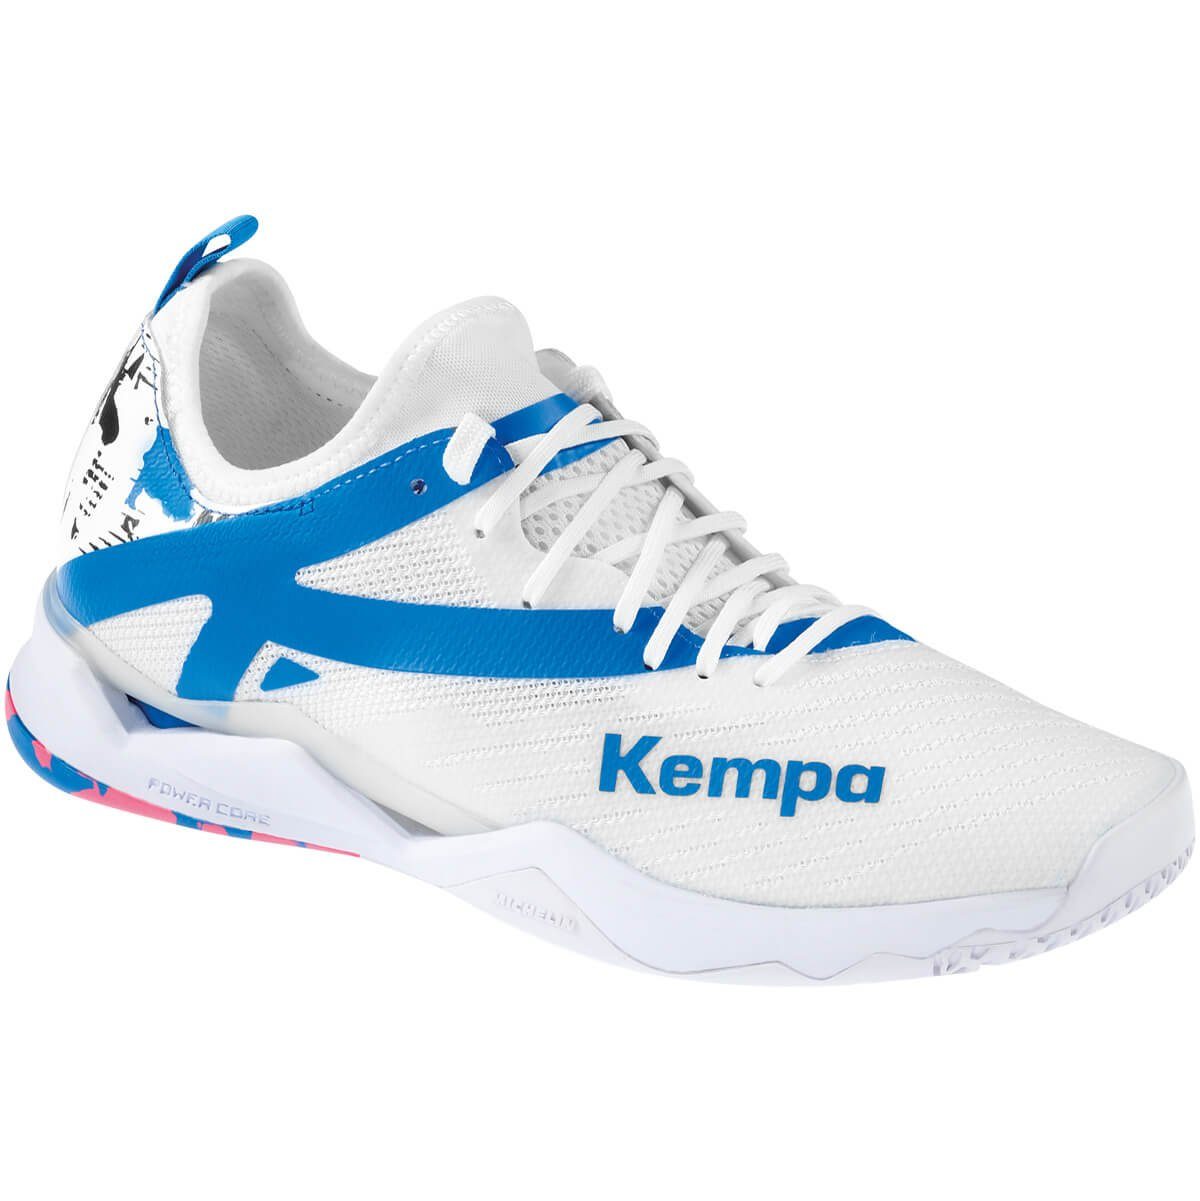 Kempa Kempa Hallen-Sport-Schuhe Hallenschuh weiß/fair blau | Hallenschuhe